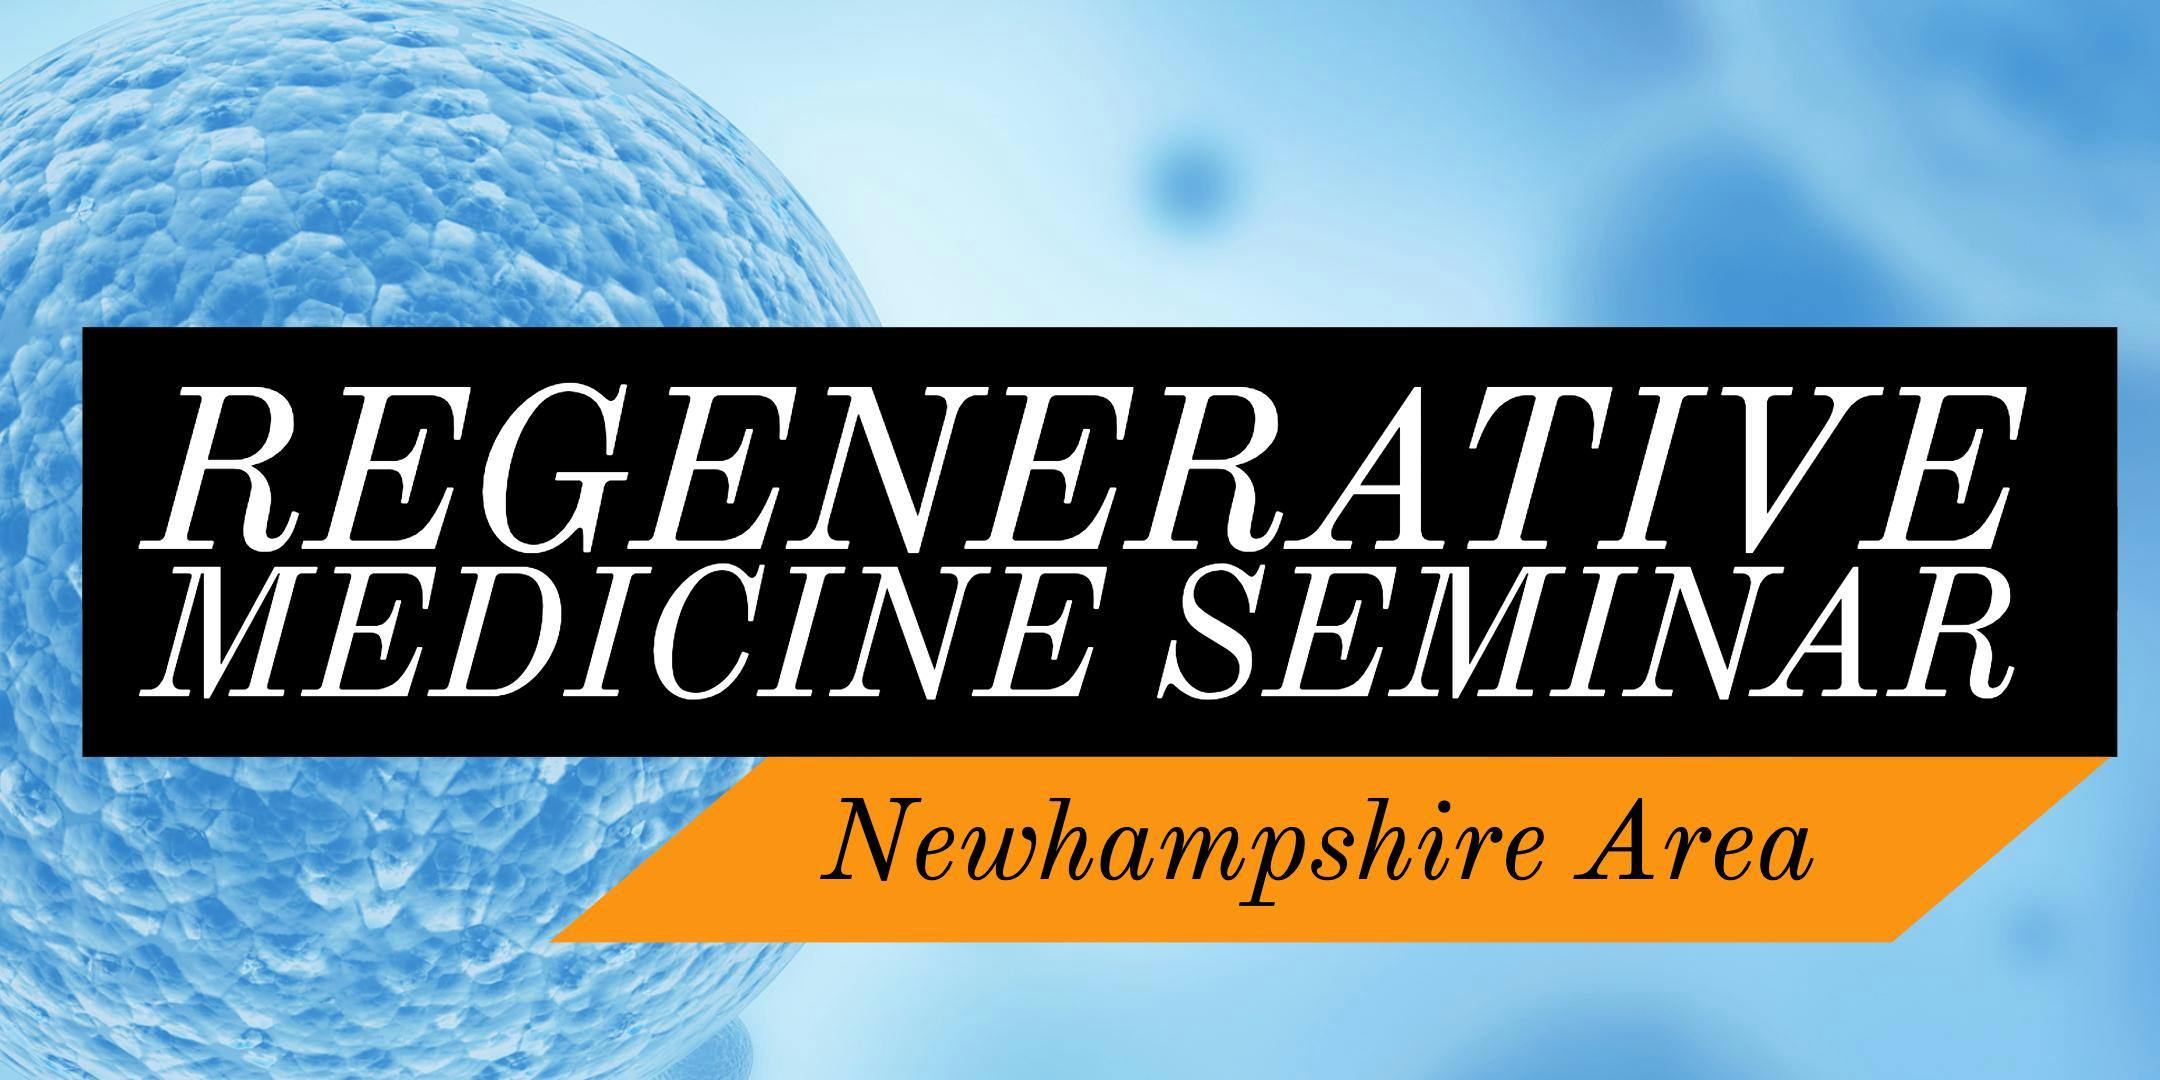 FREE Regenerative Medicine & Stem Cell For Pain Seminar - Concord, NH Area